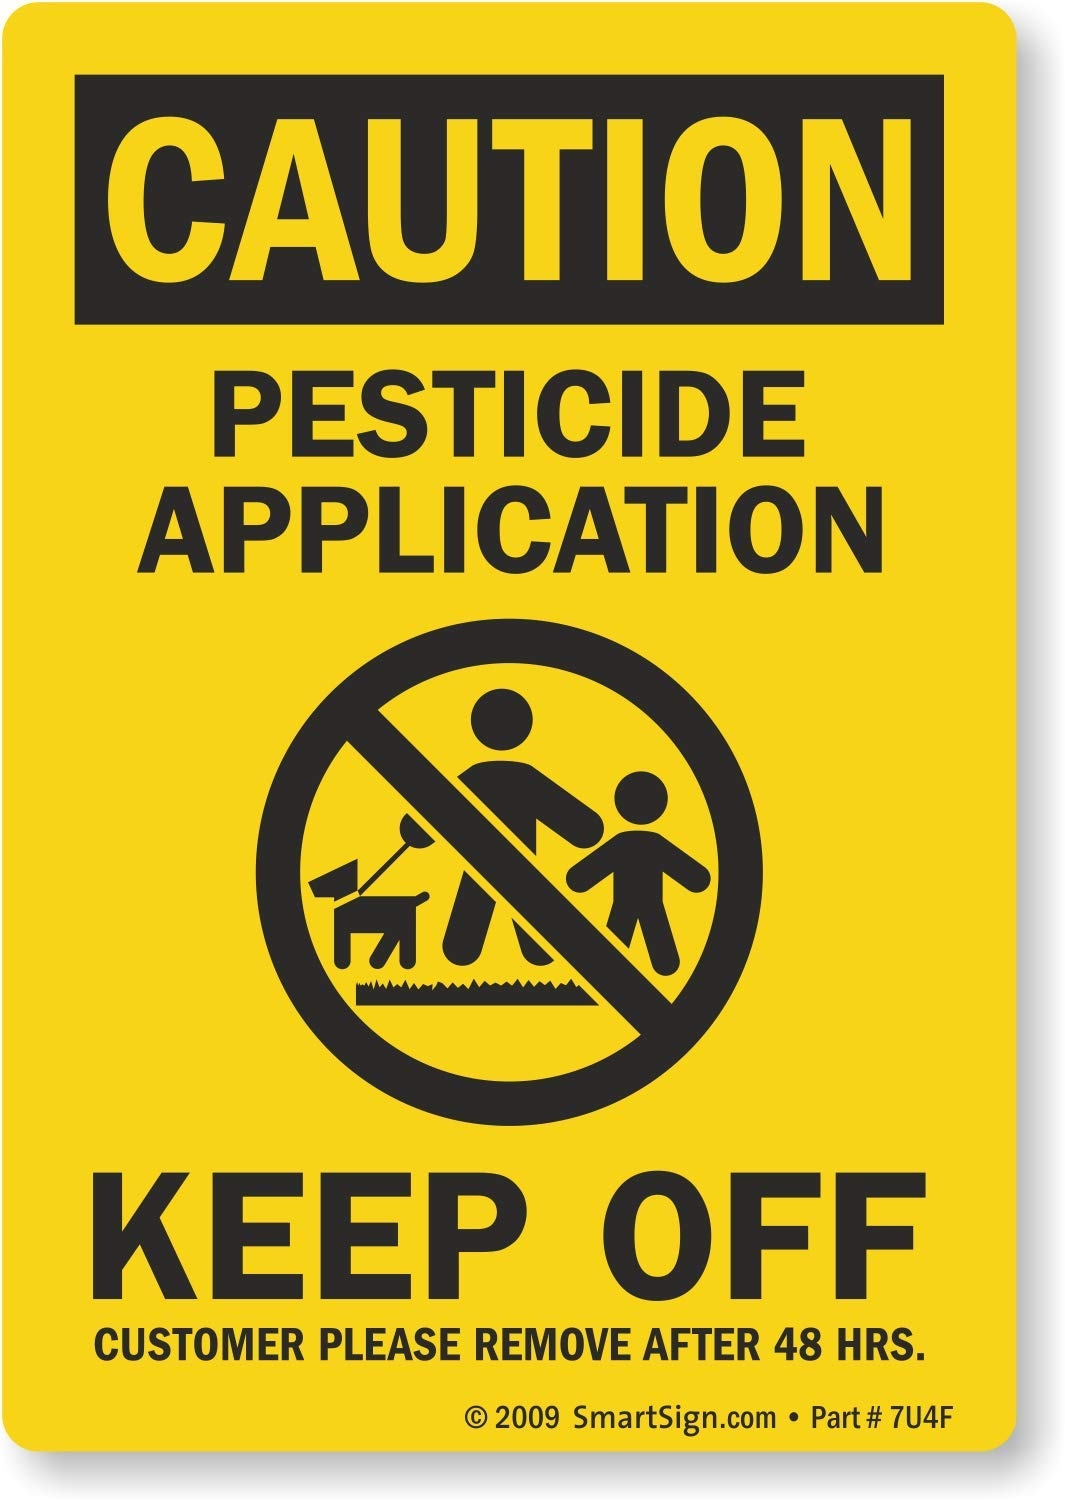 Amazon SmartSign S 4952 EU 05 Caution Pesticide Application Keep Off Write On Label 3 5 X 5 Laminated Vinyl Black On Yellow Industrial Scientific